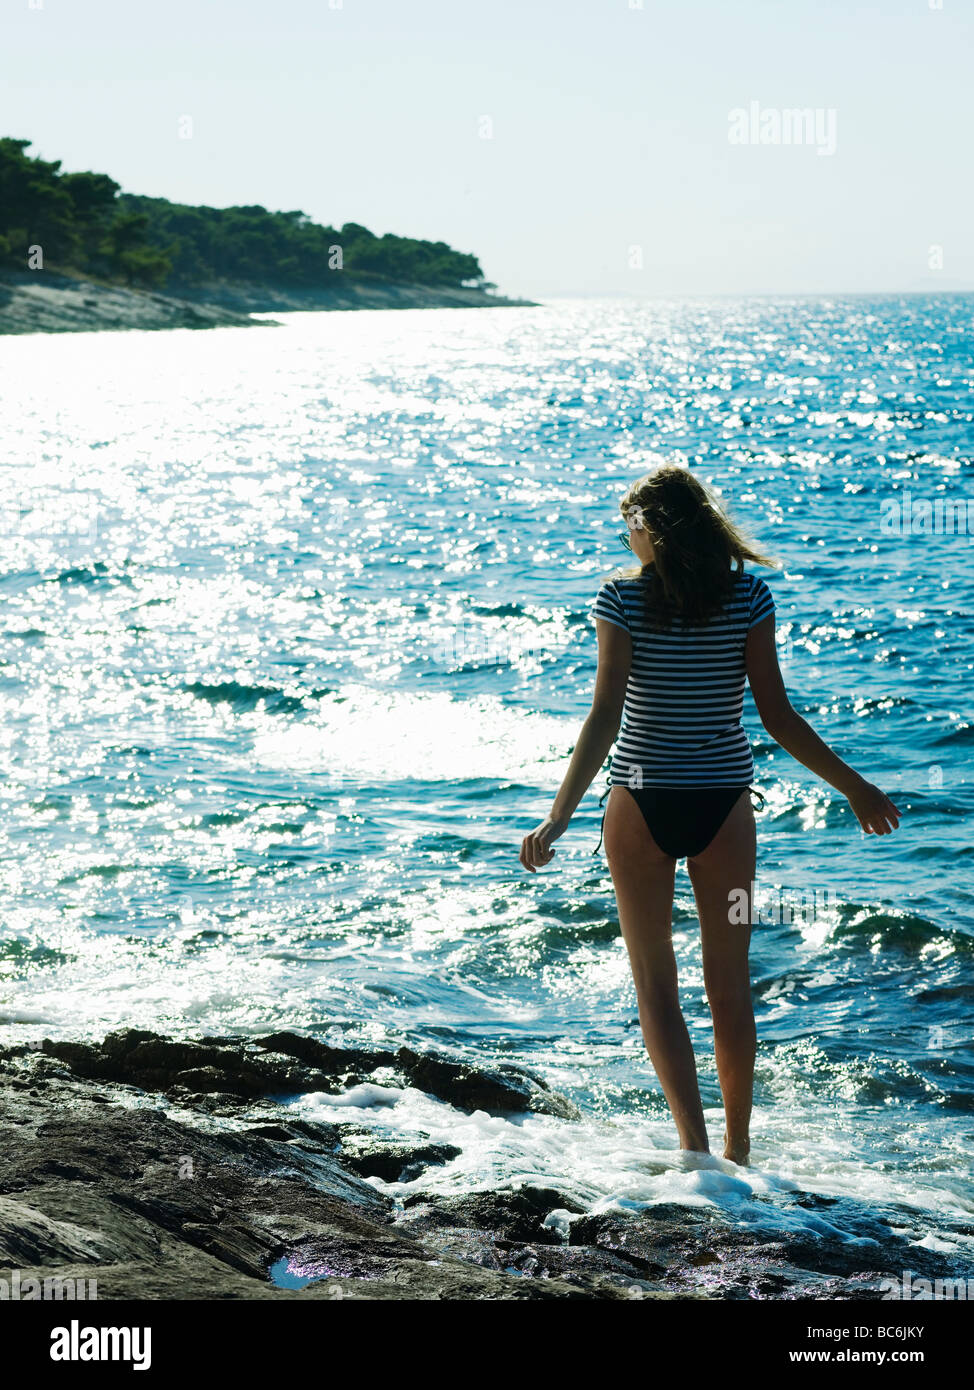 Young woman wearing bikini, taking off shirt by sea Stock Photo - Alamy